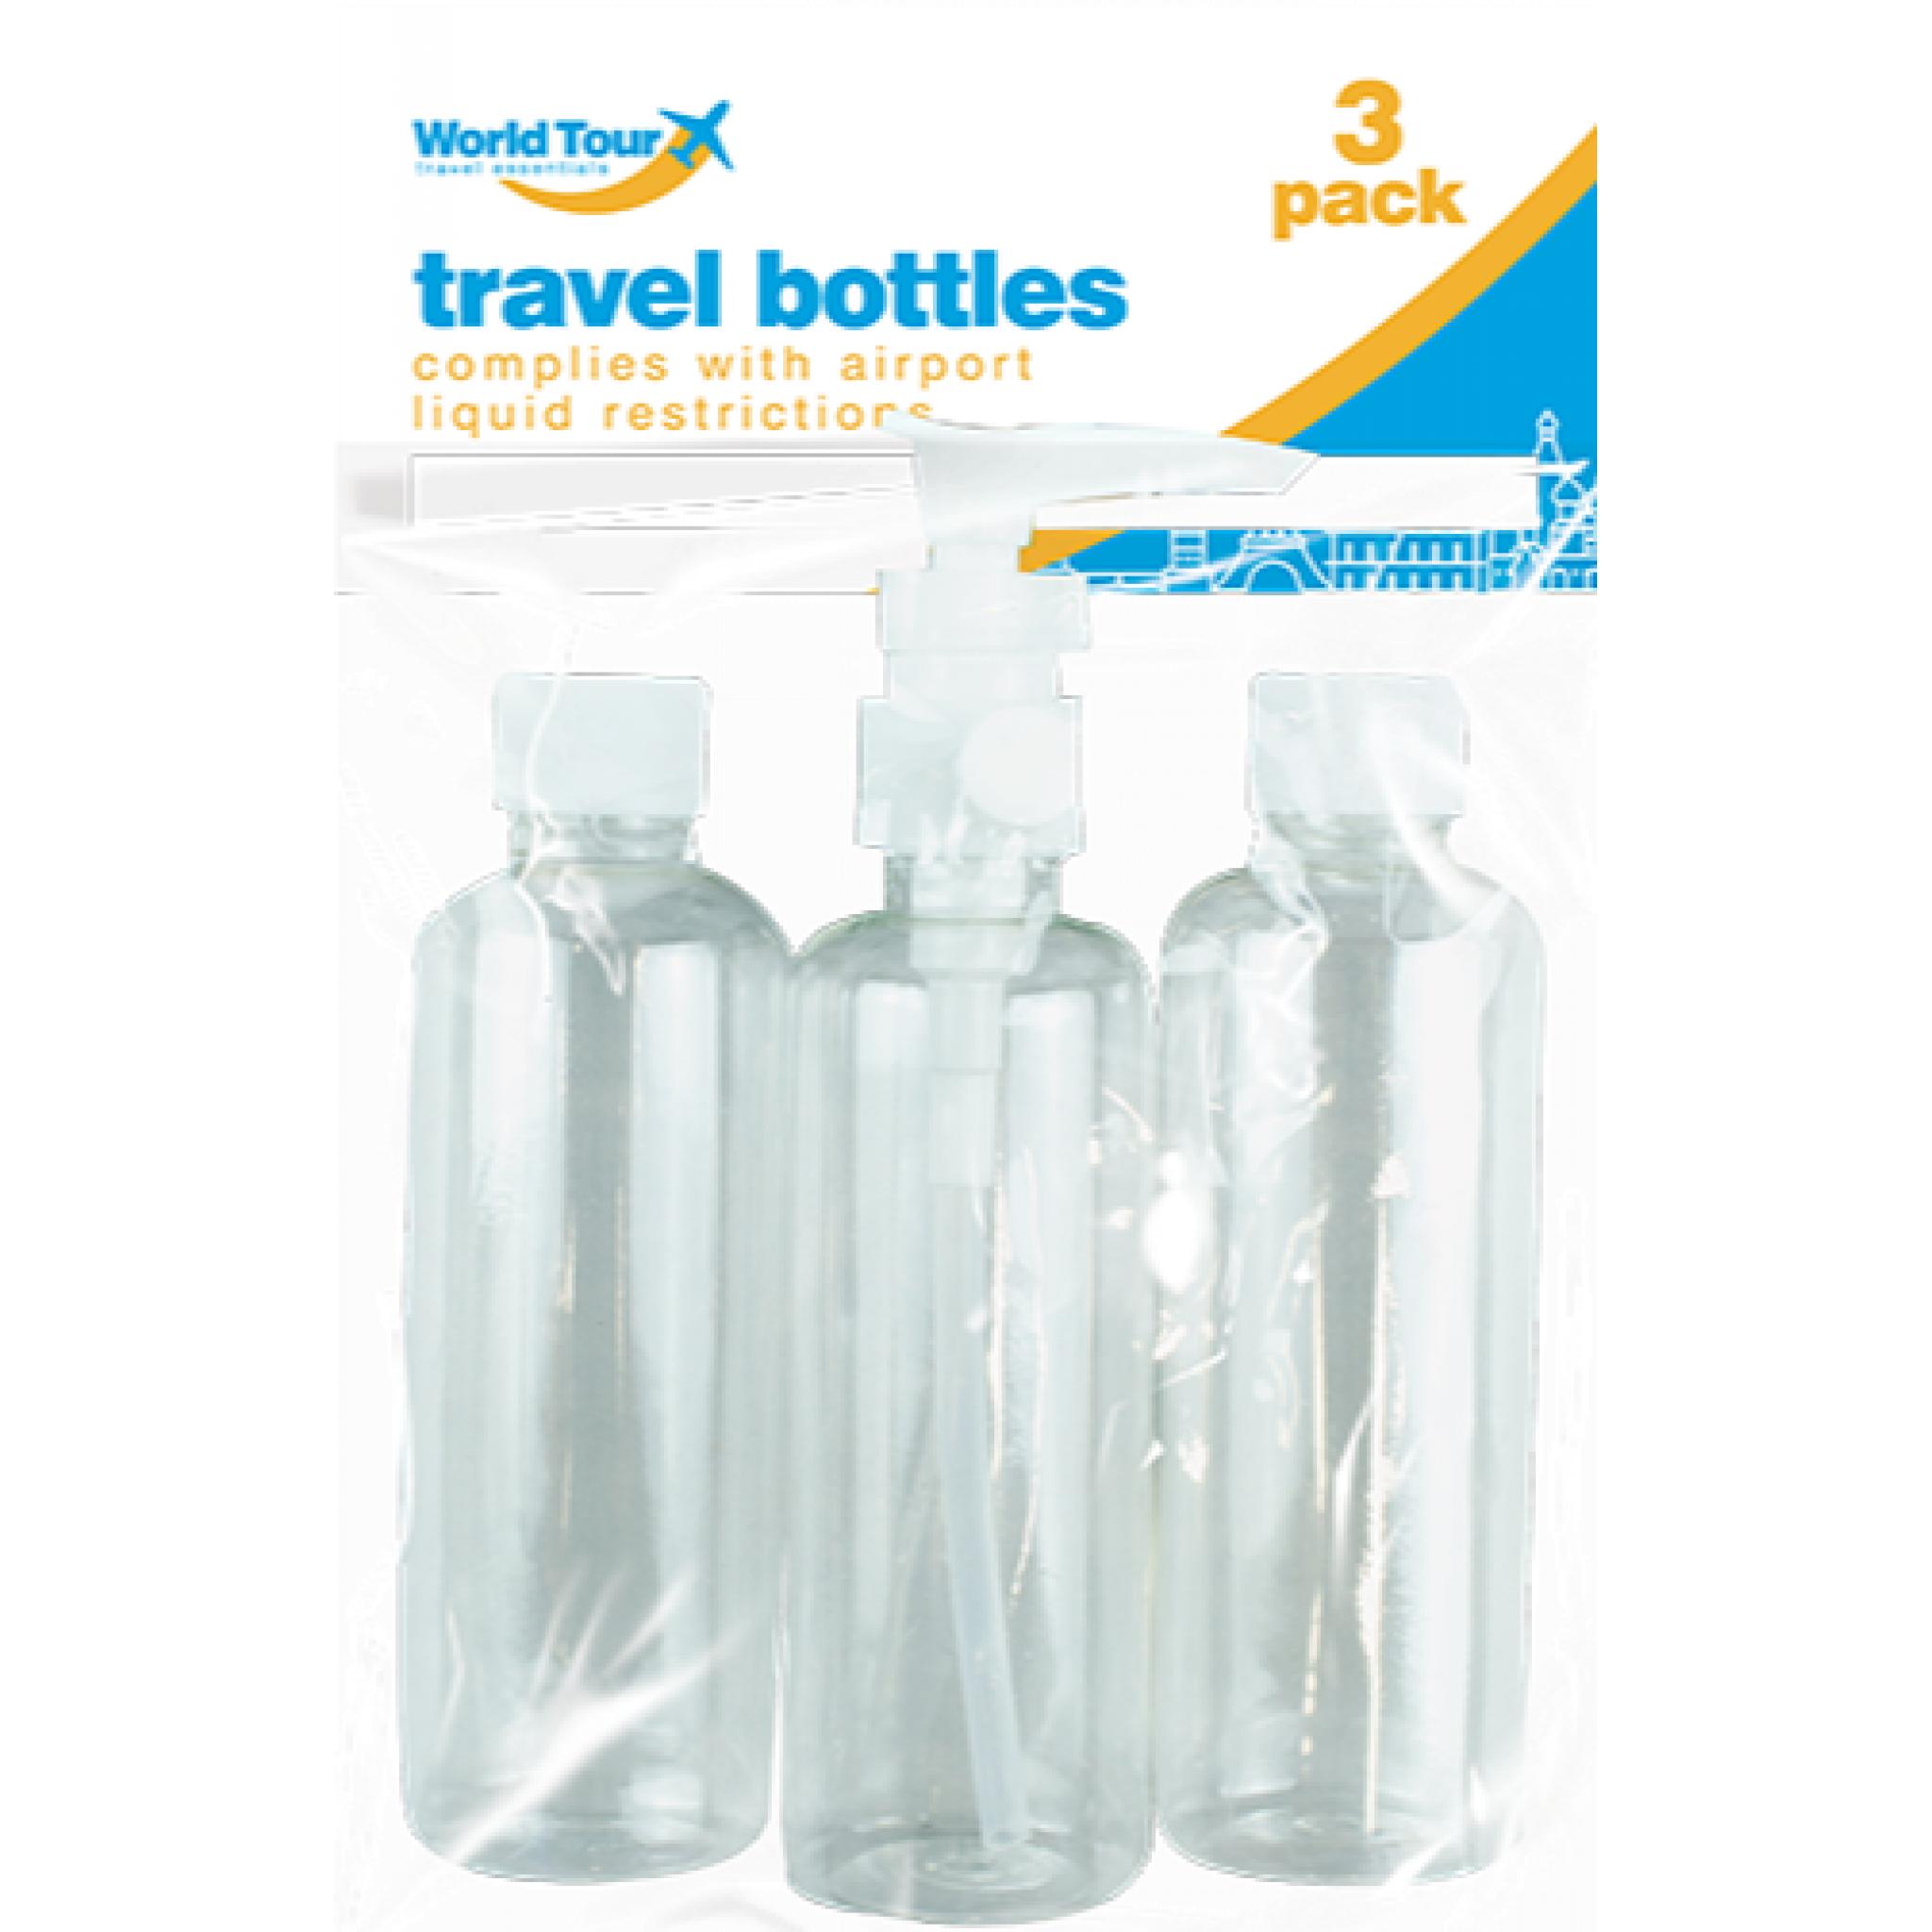 100ml travel bottles nz